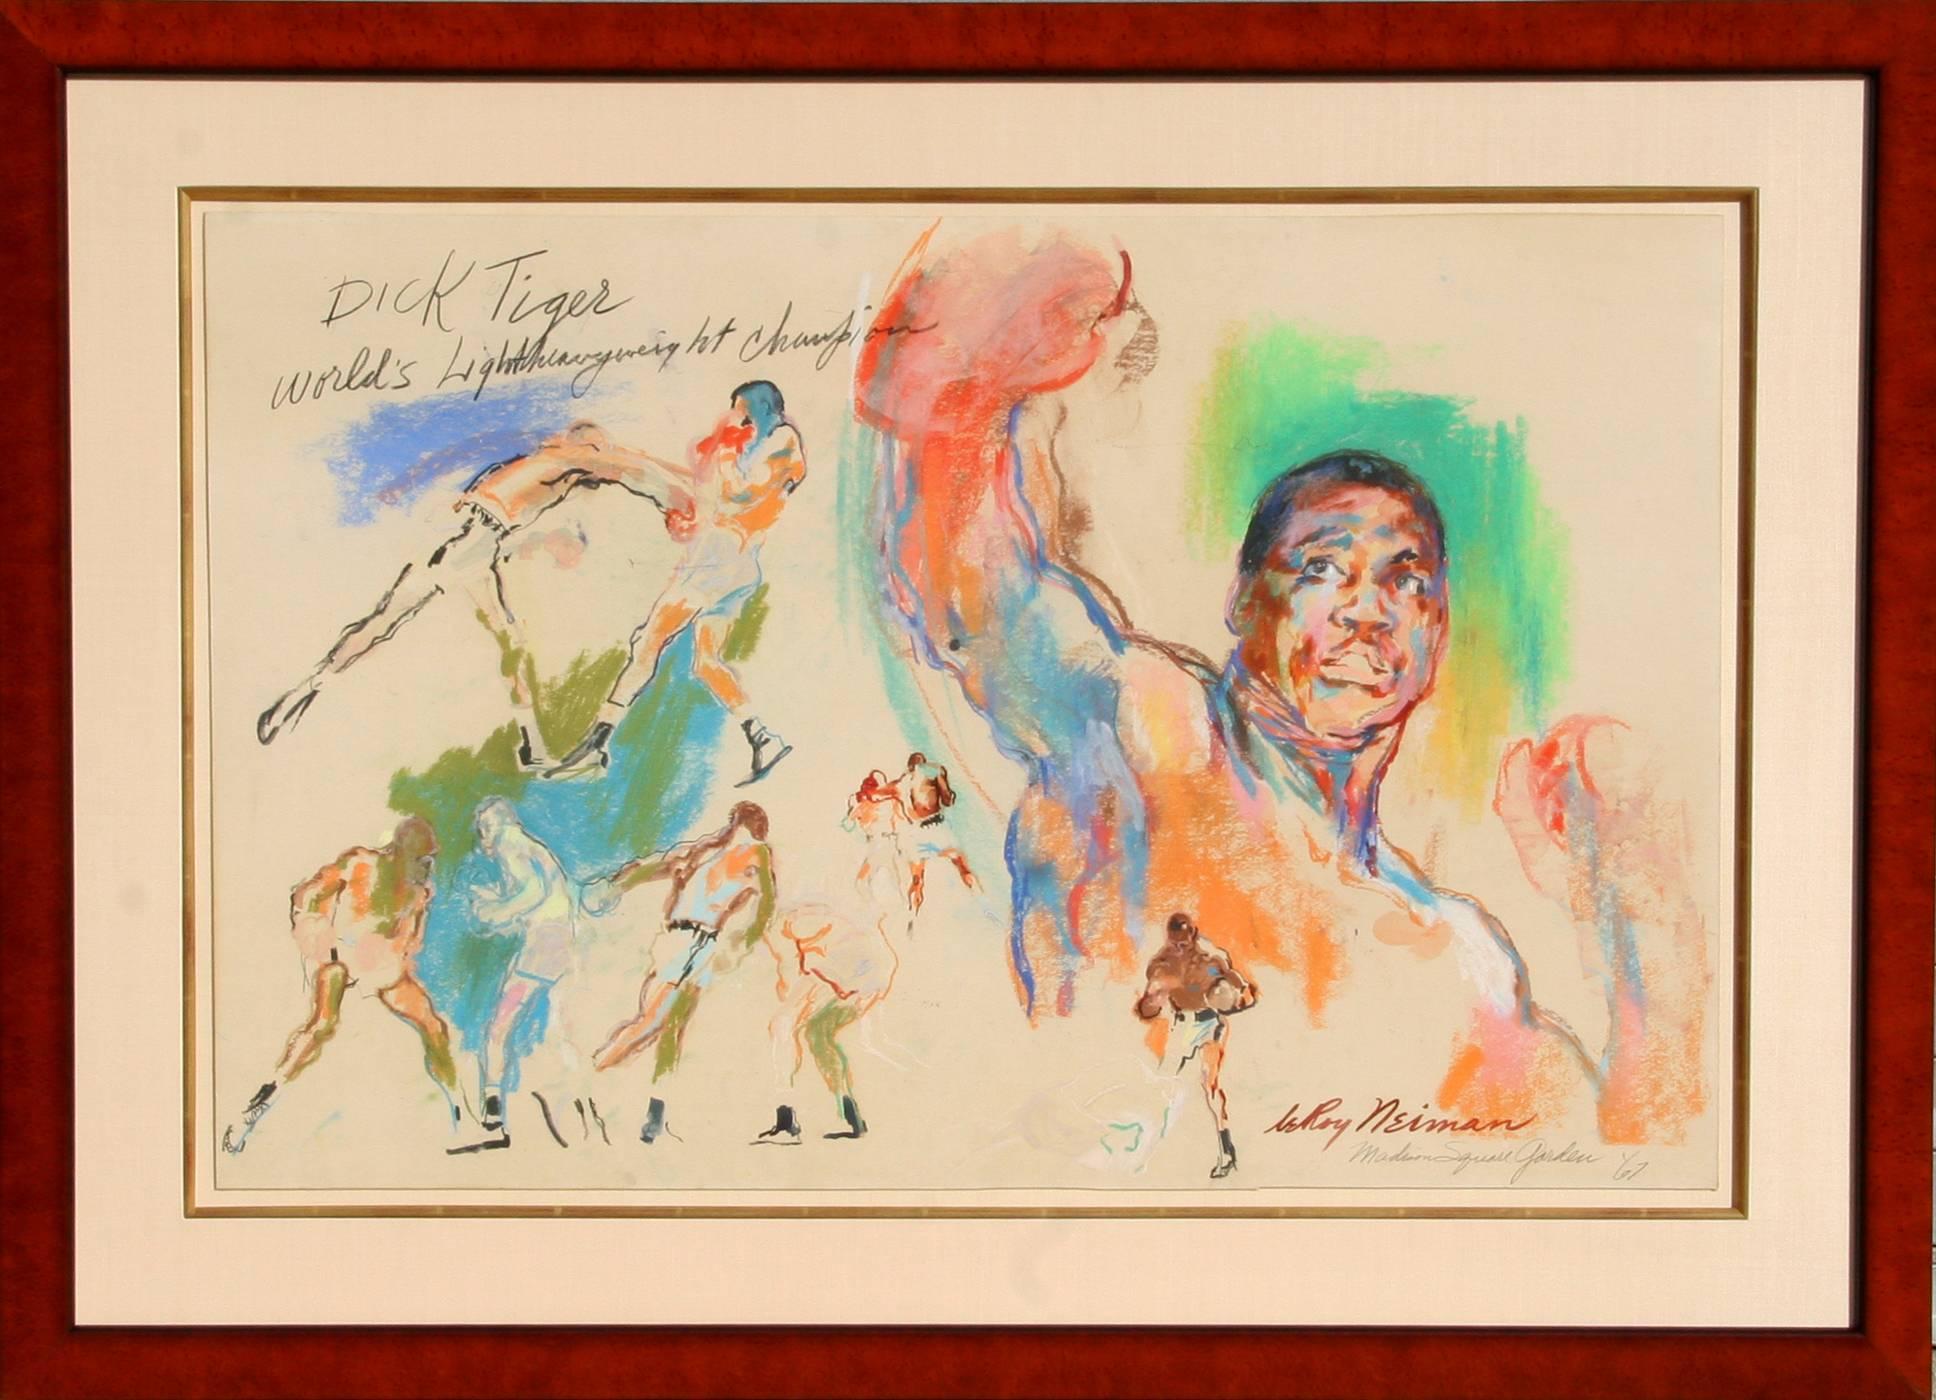 Dick Tiger, peinture de boxe de Leroy Neiman 1967